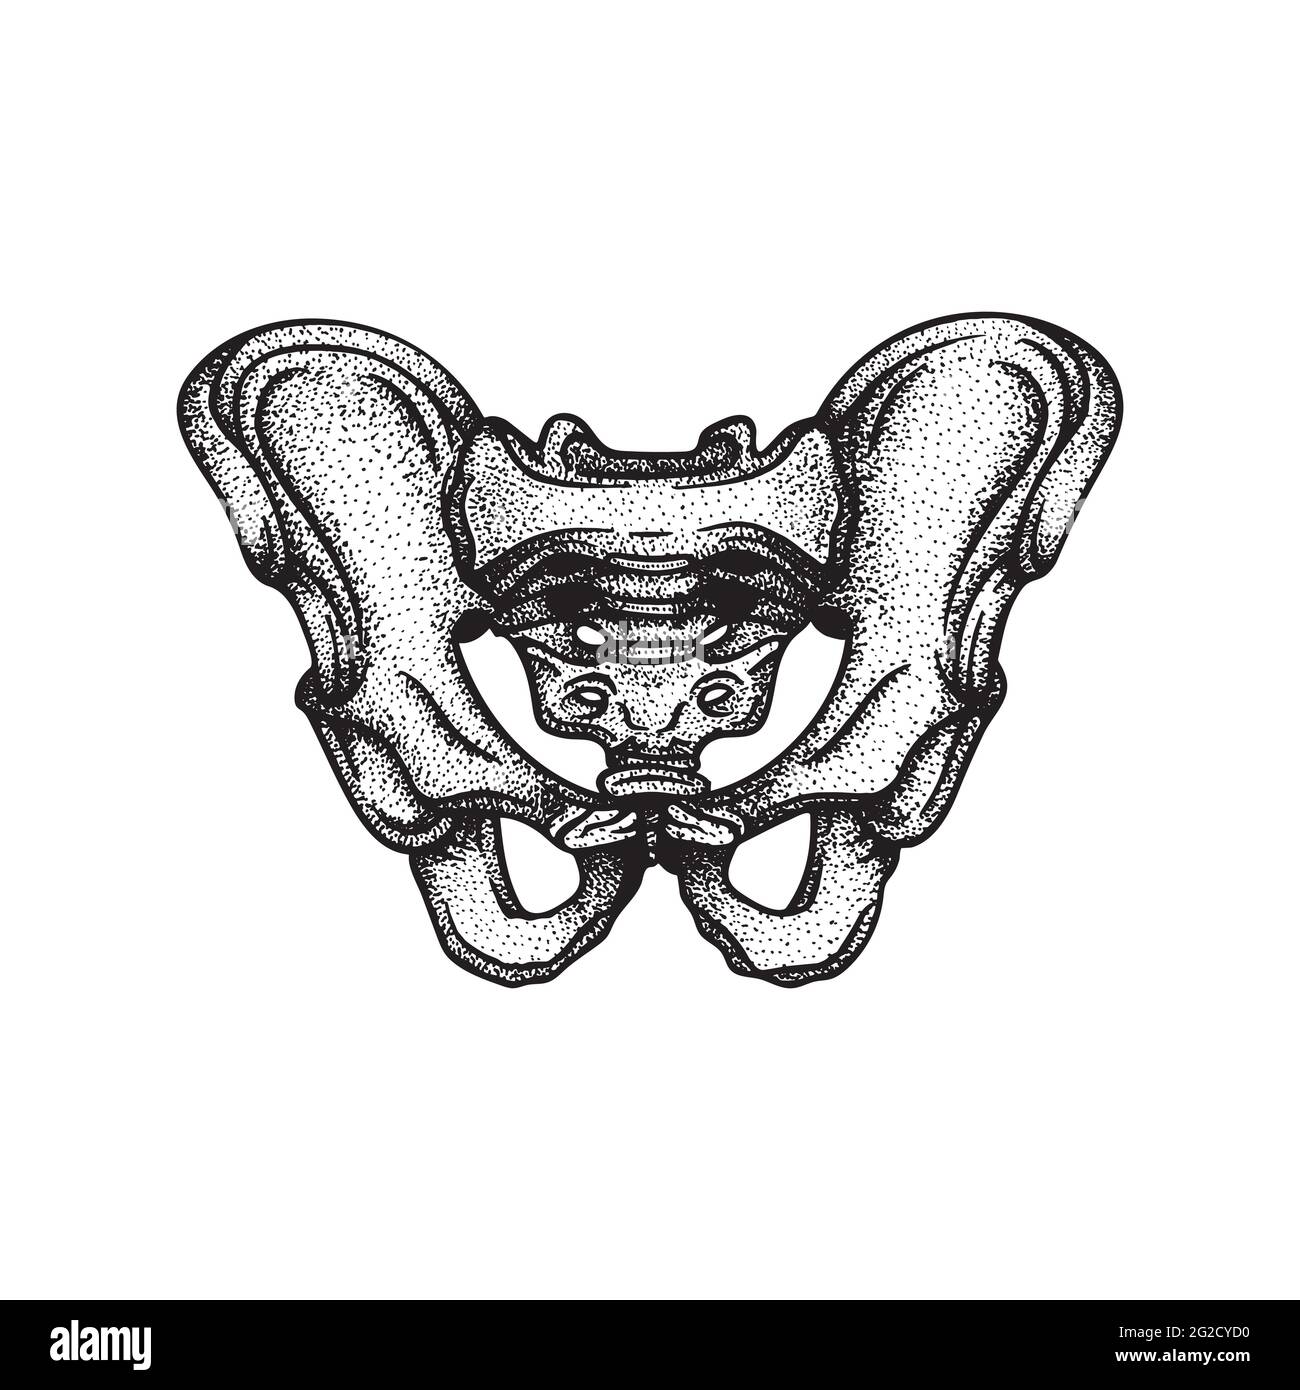 Pelvis. Human pelvis bone hand drawn vector illustration. Part of human skeleton graphic. Stock Vector